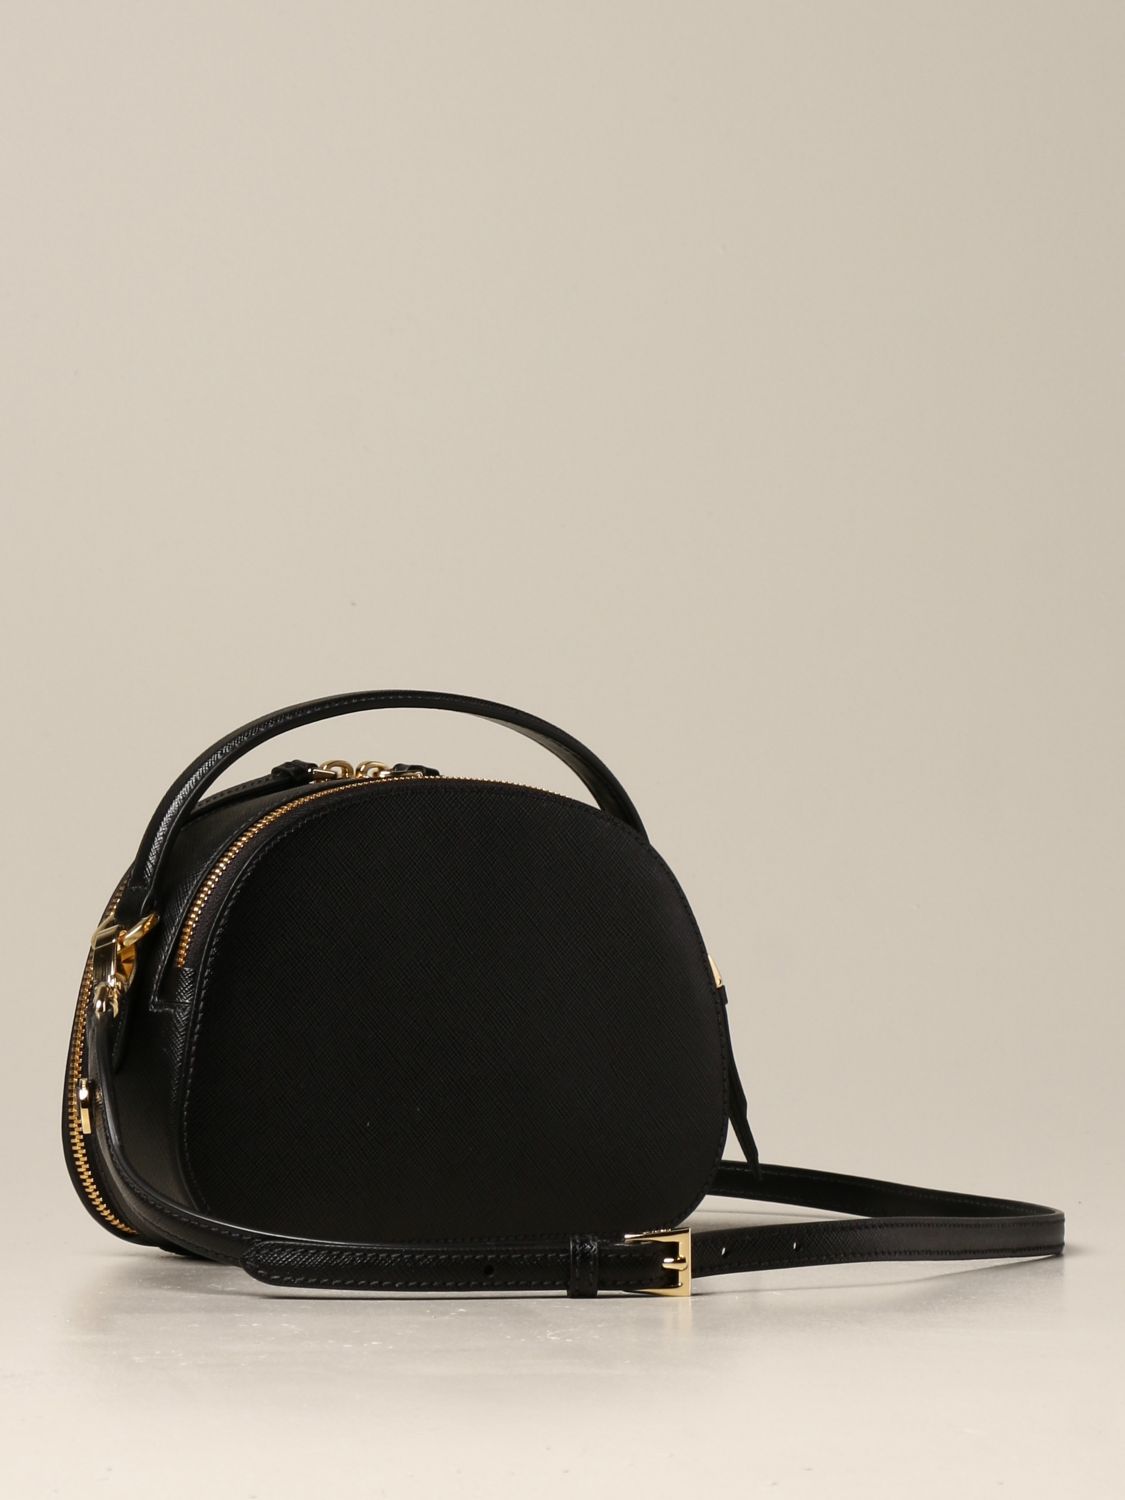 PRADA: Odette bag in saffiano leather - Black  Prada mini bag 1BH123 NZV  online at